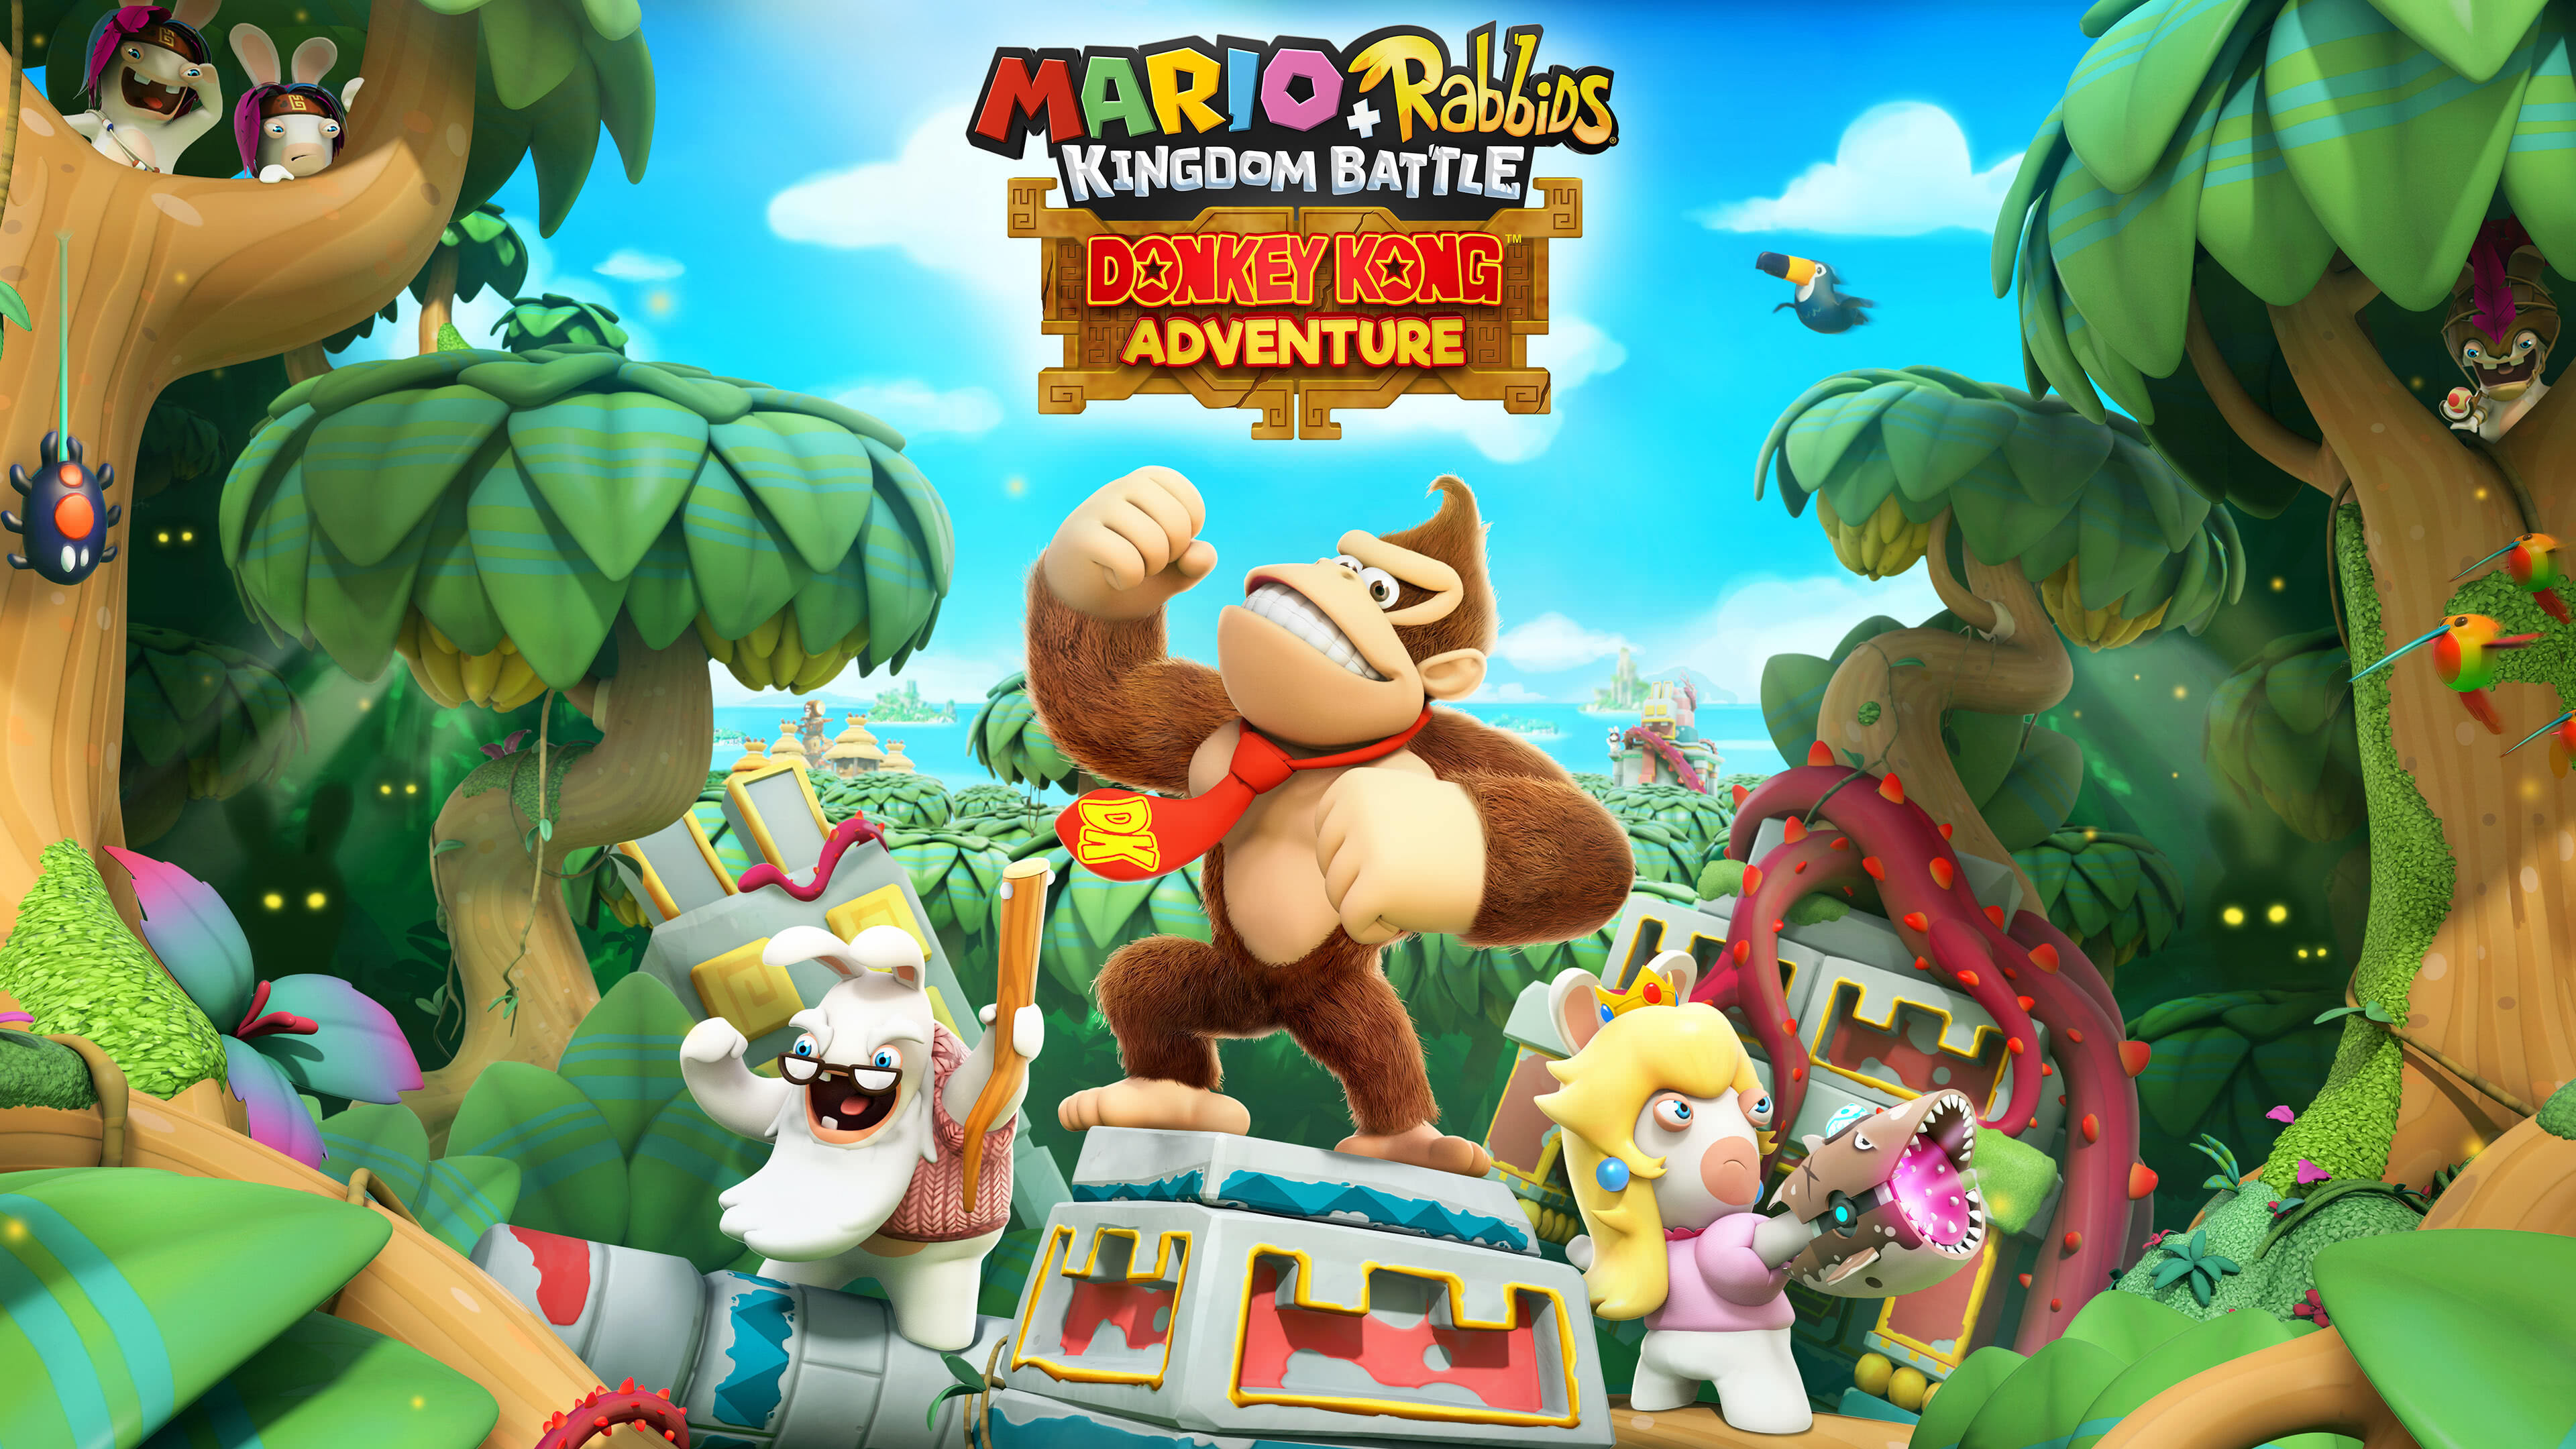 Mario Rabbids Kingdom Battle Donkey Kong Adventure UHD 4K Wallpaper | Pixelz